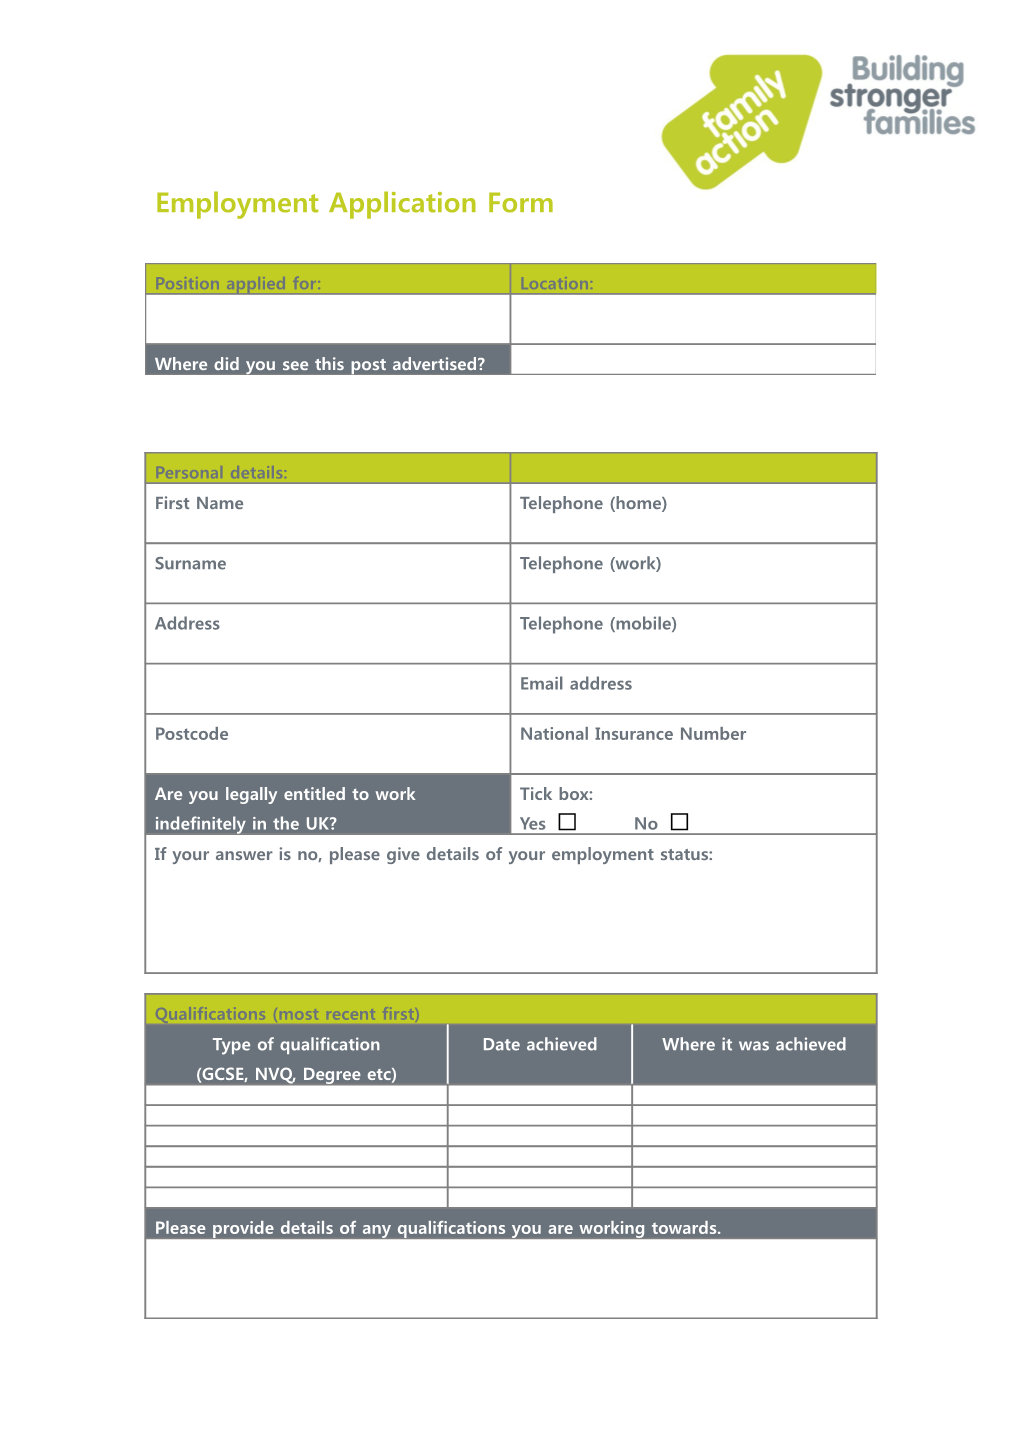 Employment Application Form s8